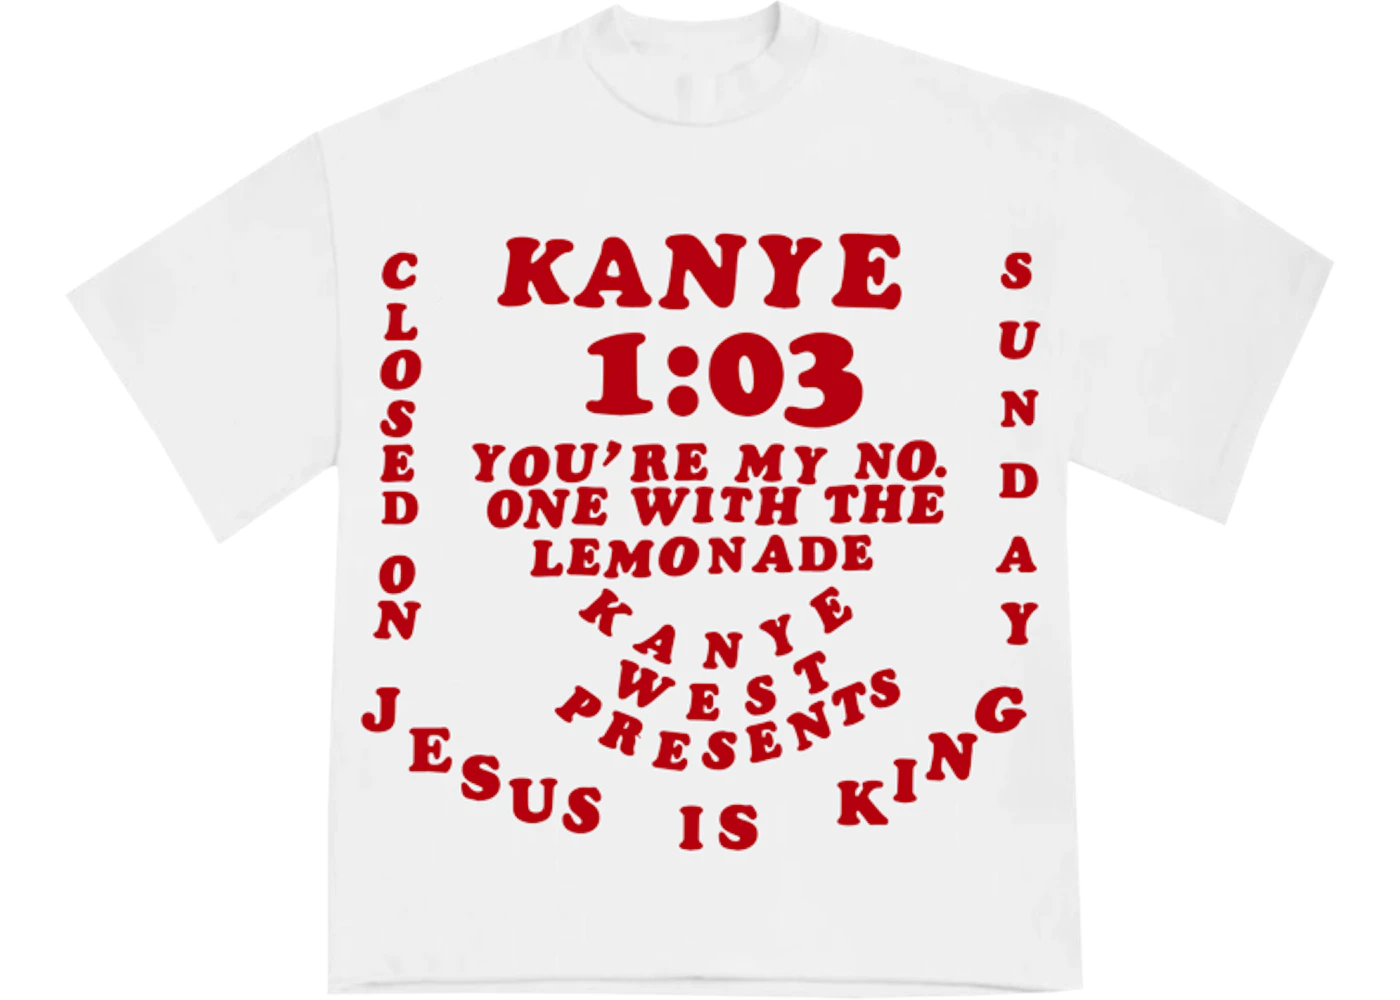 Kanye West CPFM for JIK III T-Shirt White - FW19 Men's - US